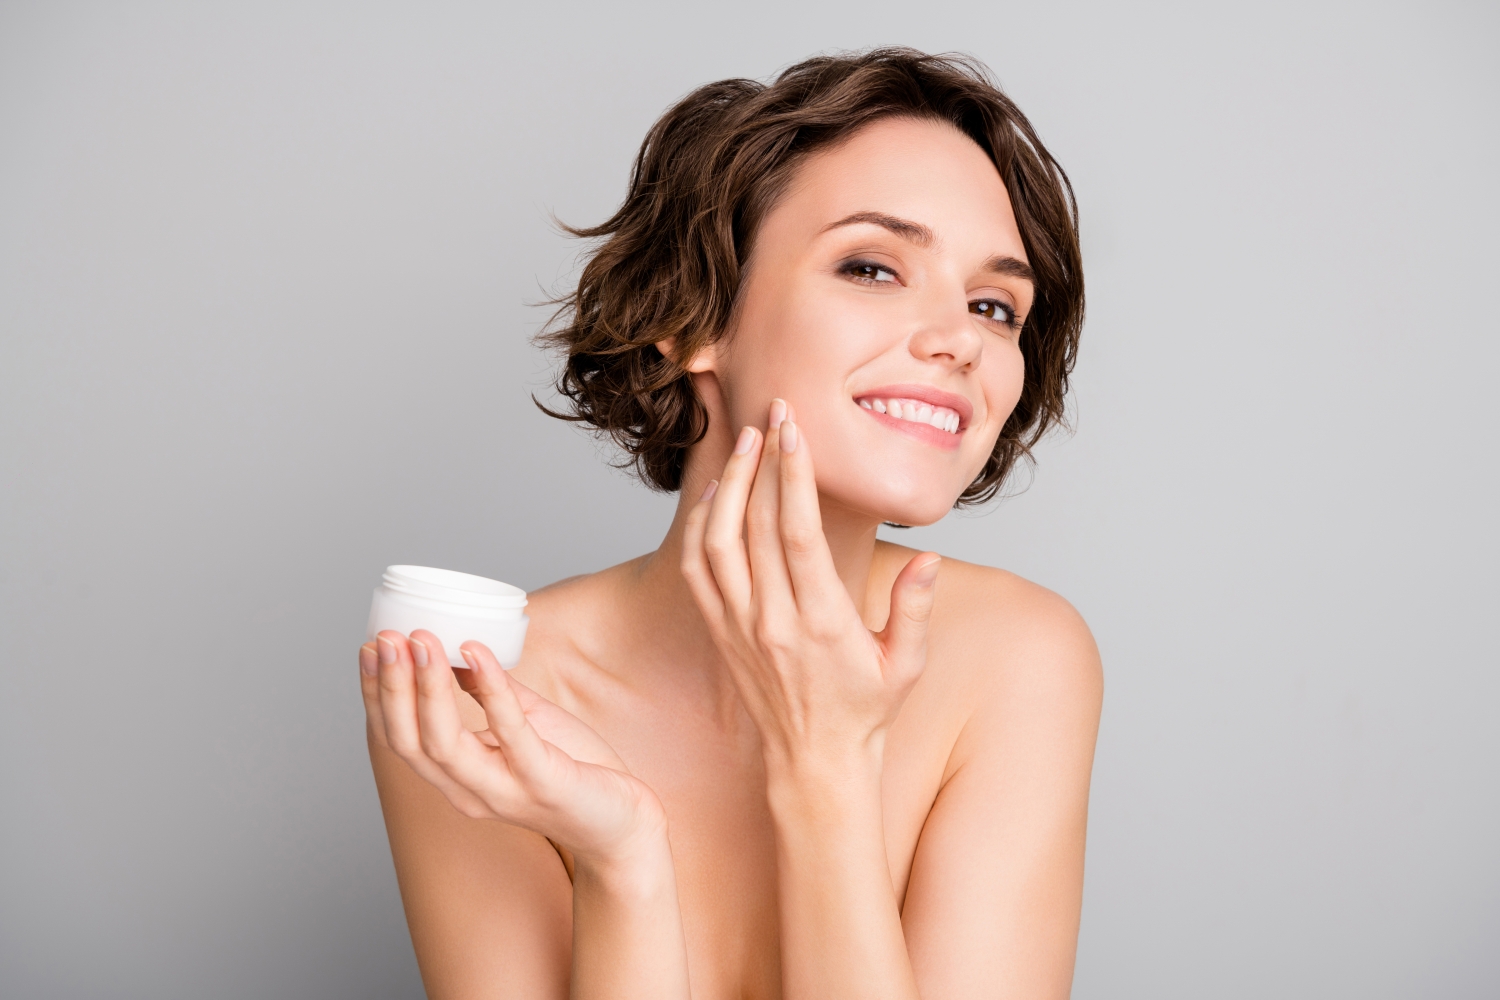 Guide to choosing the right moisturiser